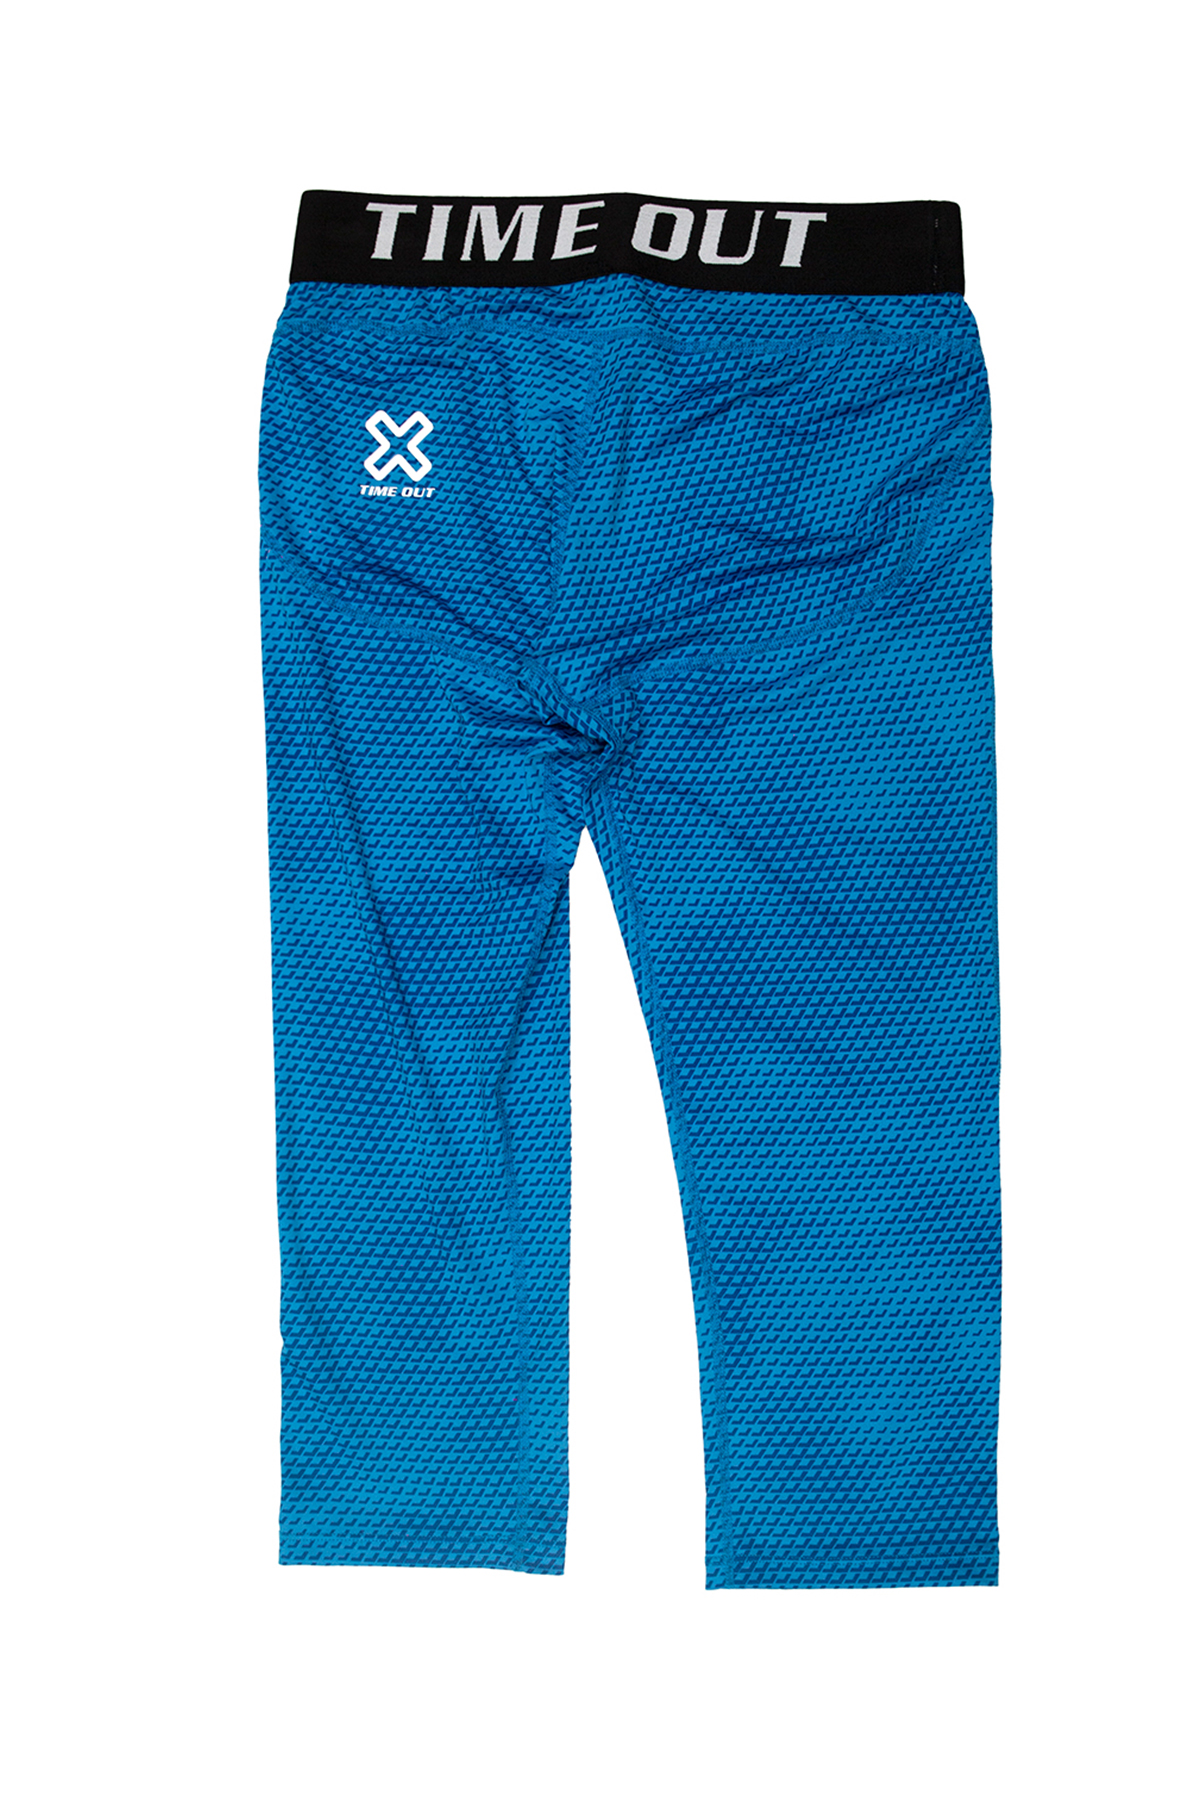 Time-Out-X-Men’s-Long-Gym-Shorts—Ocean-Blue—Front